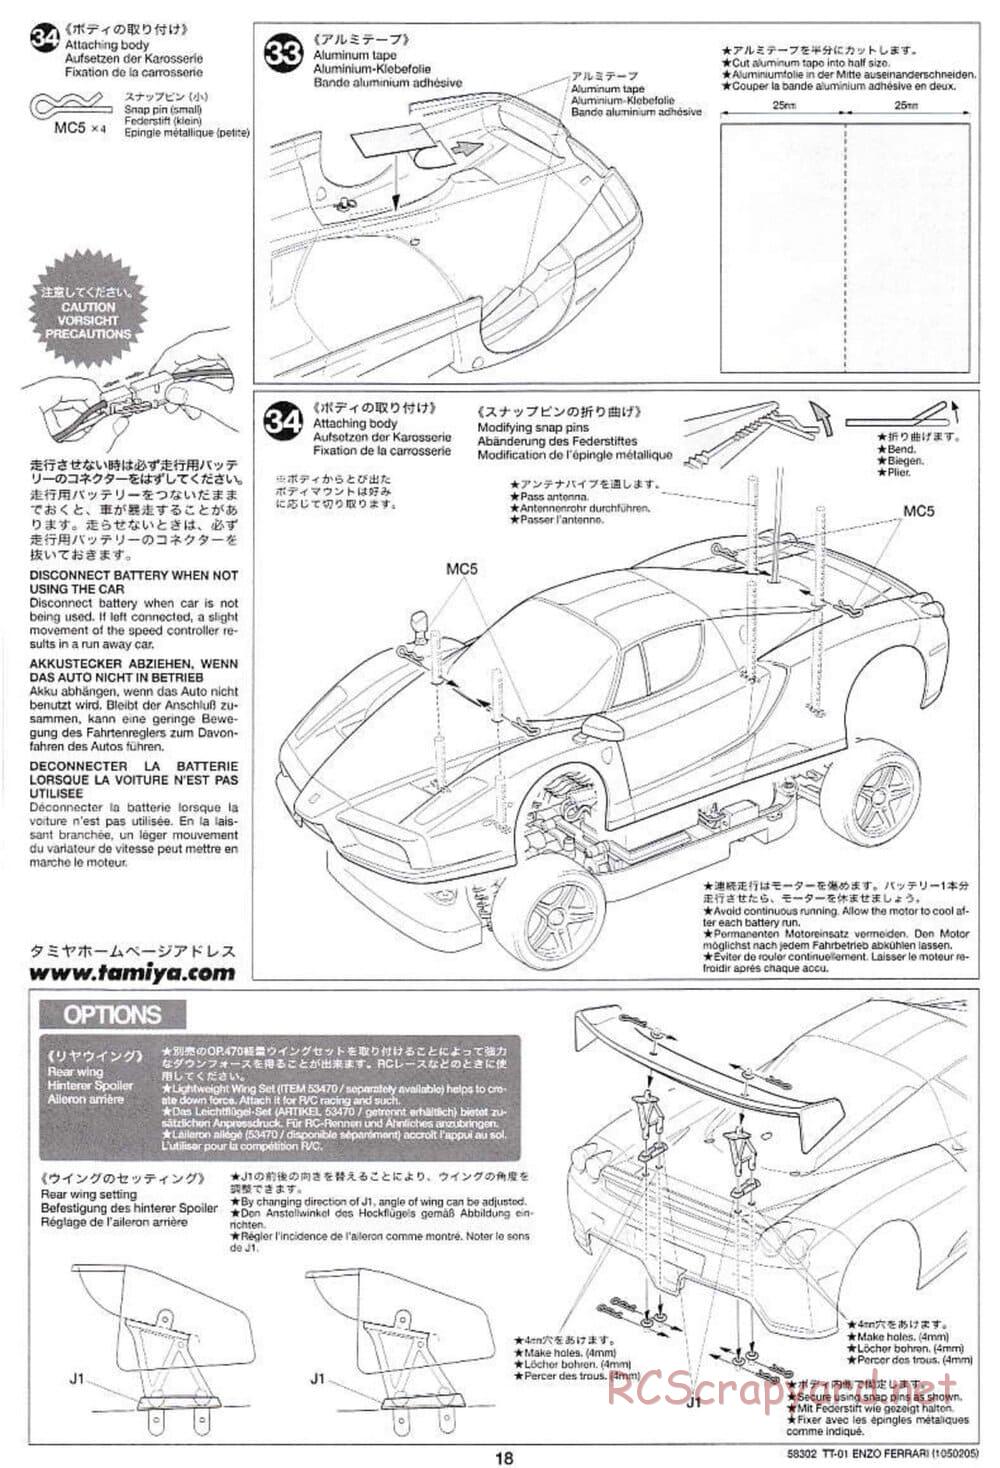 Tamiya - Enzo Ferrari - TT-01 Chassis - Manual - Page 18